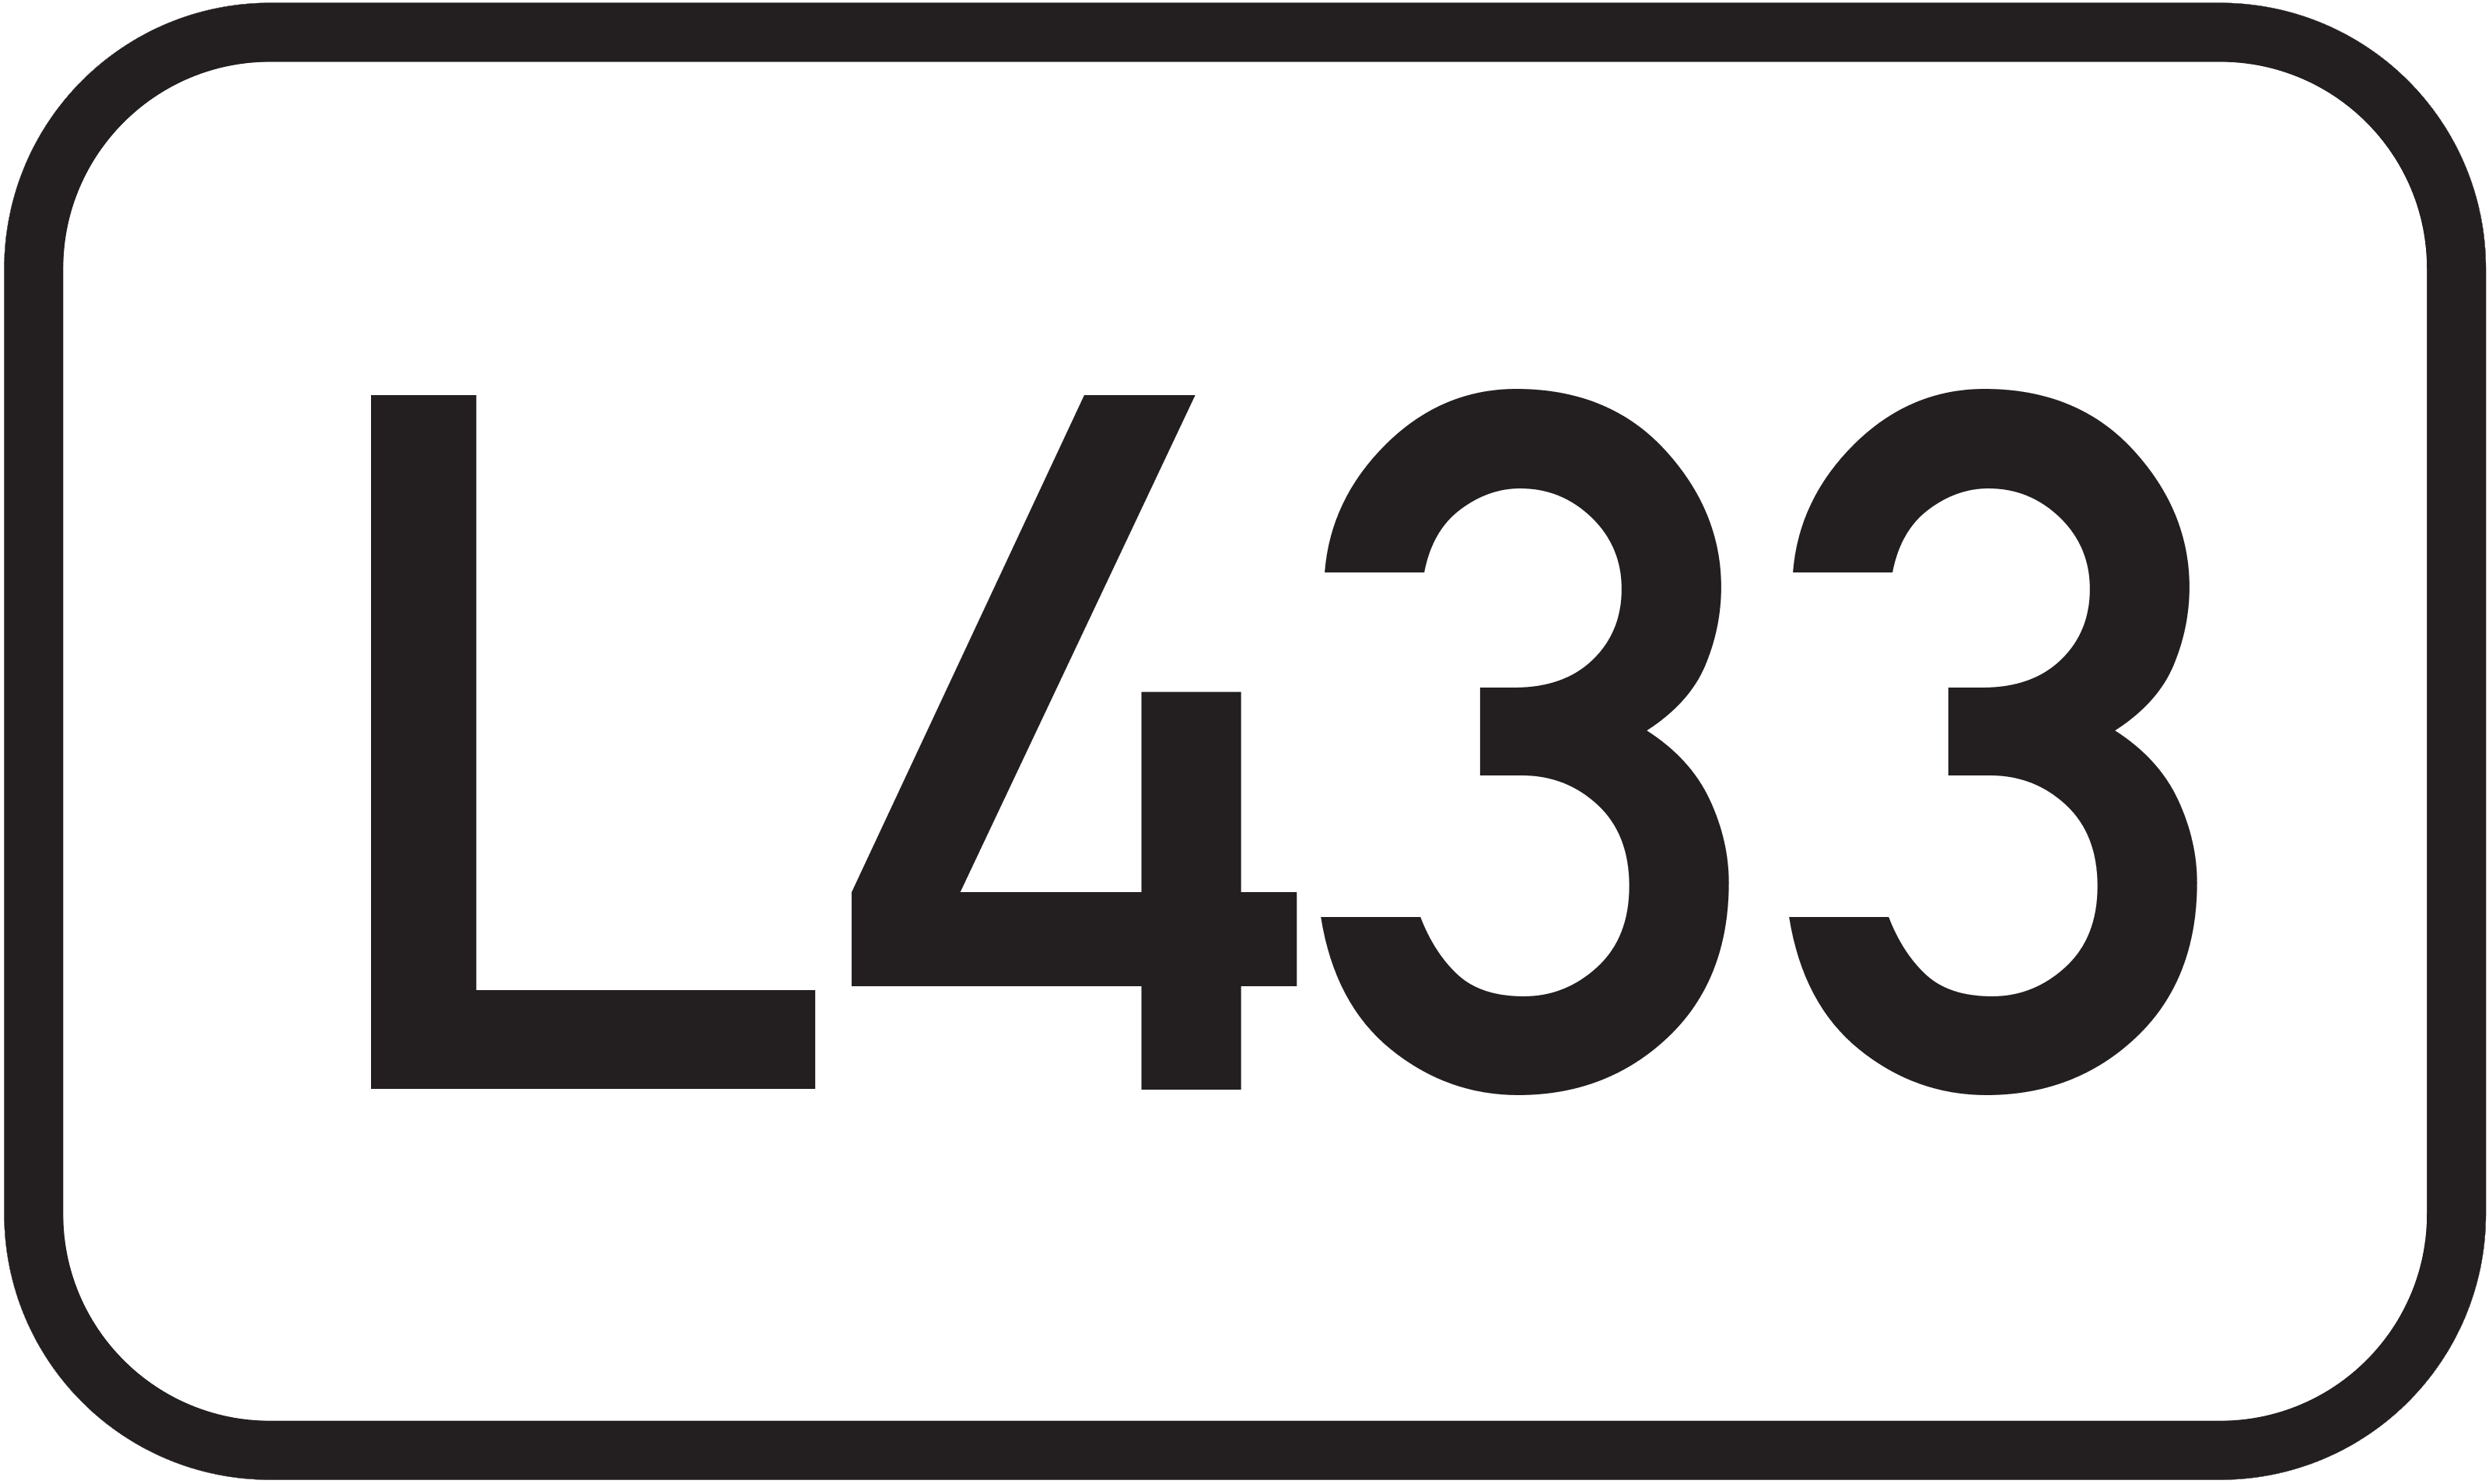 Straßenschild Landesstraße L433